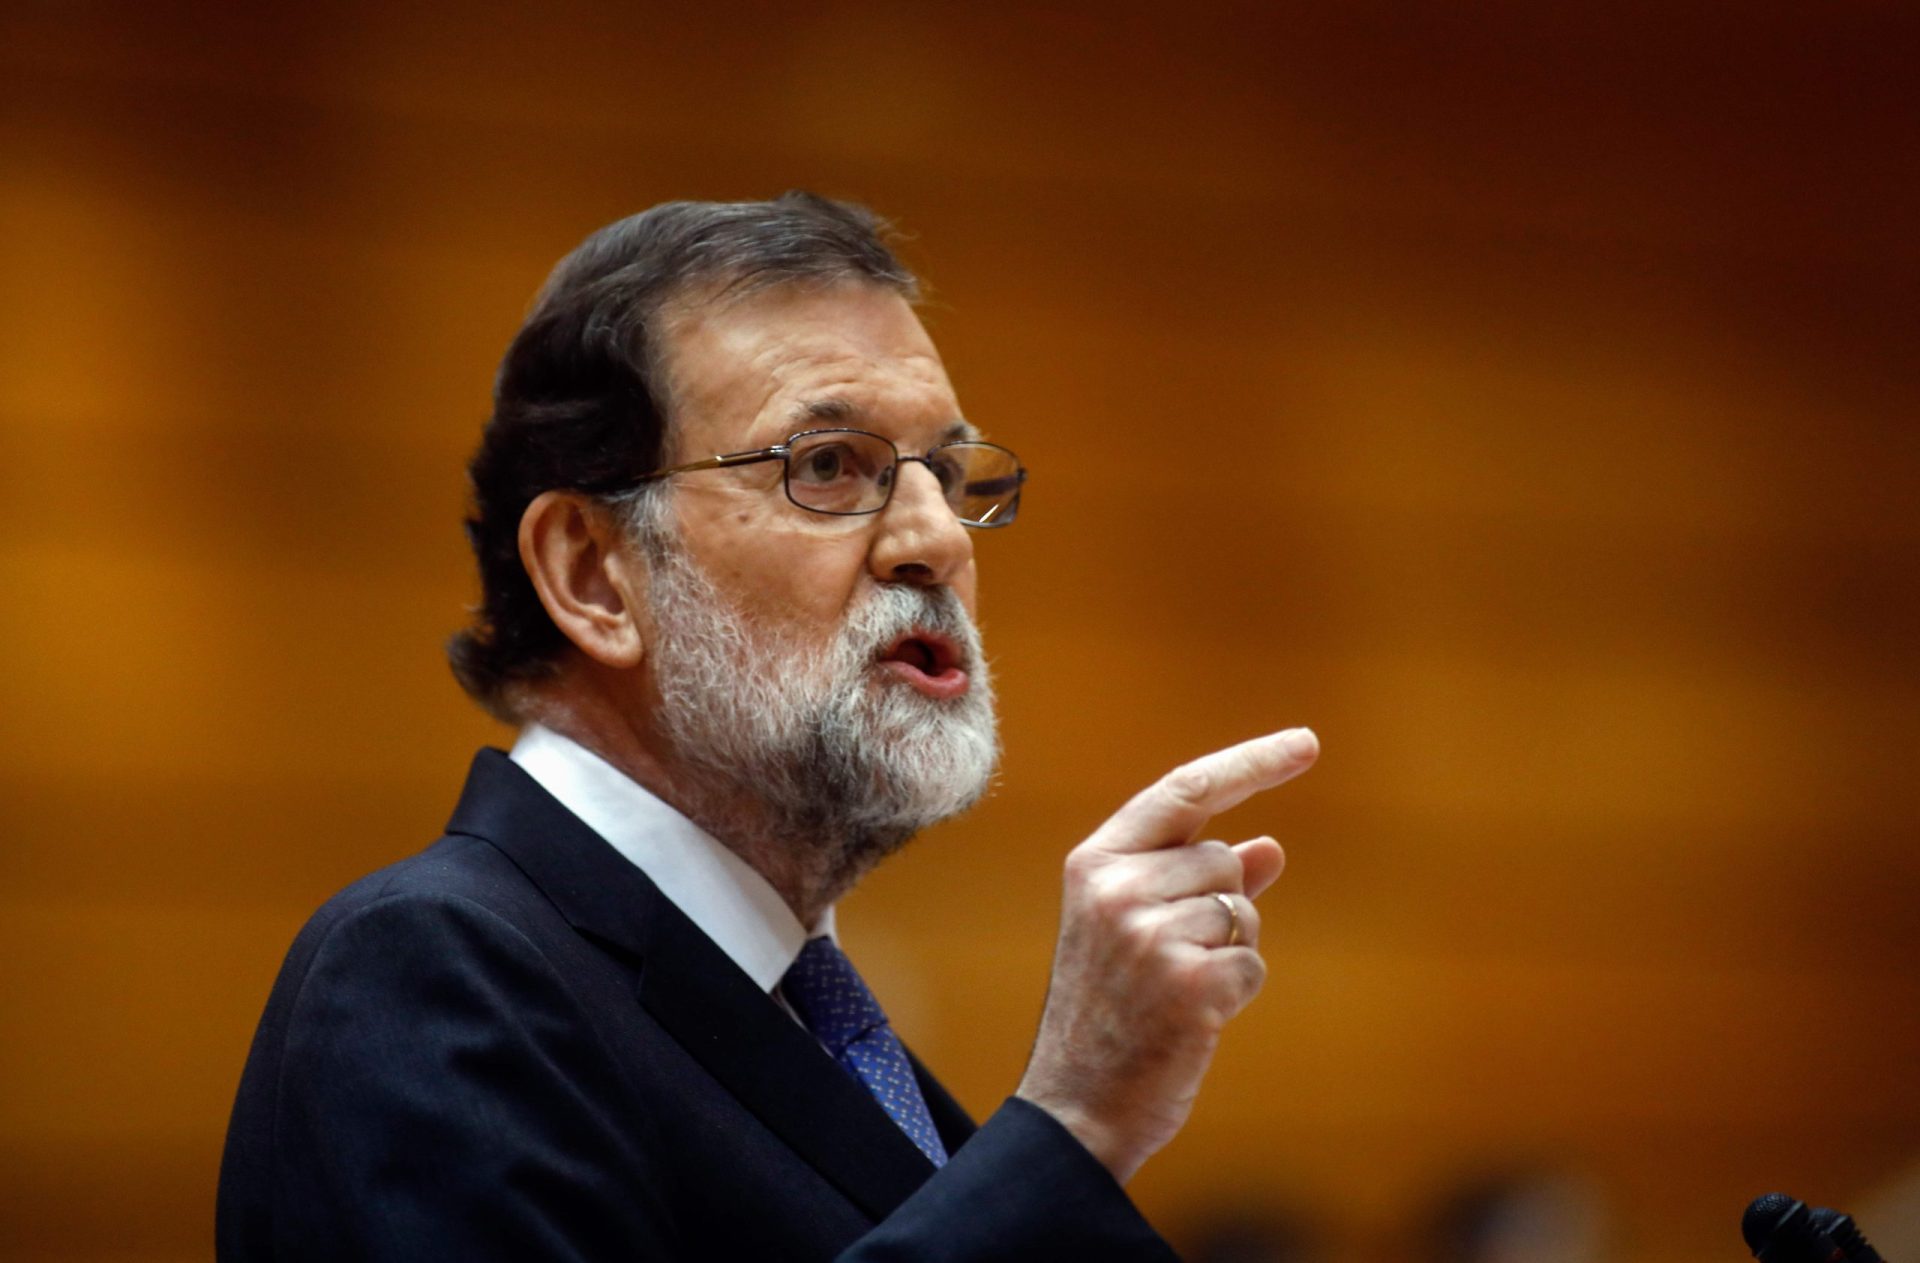 Mariano Rajoy pede “tranquilidade”